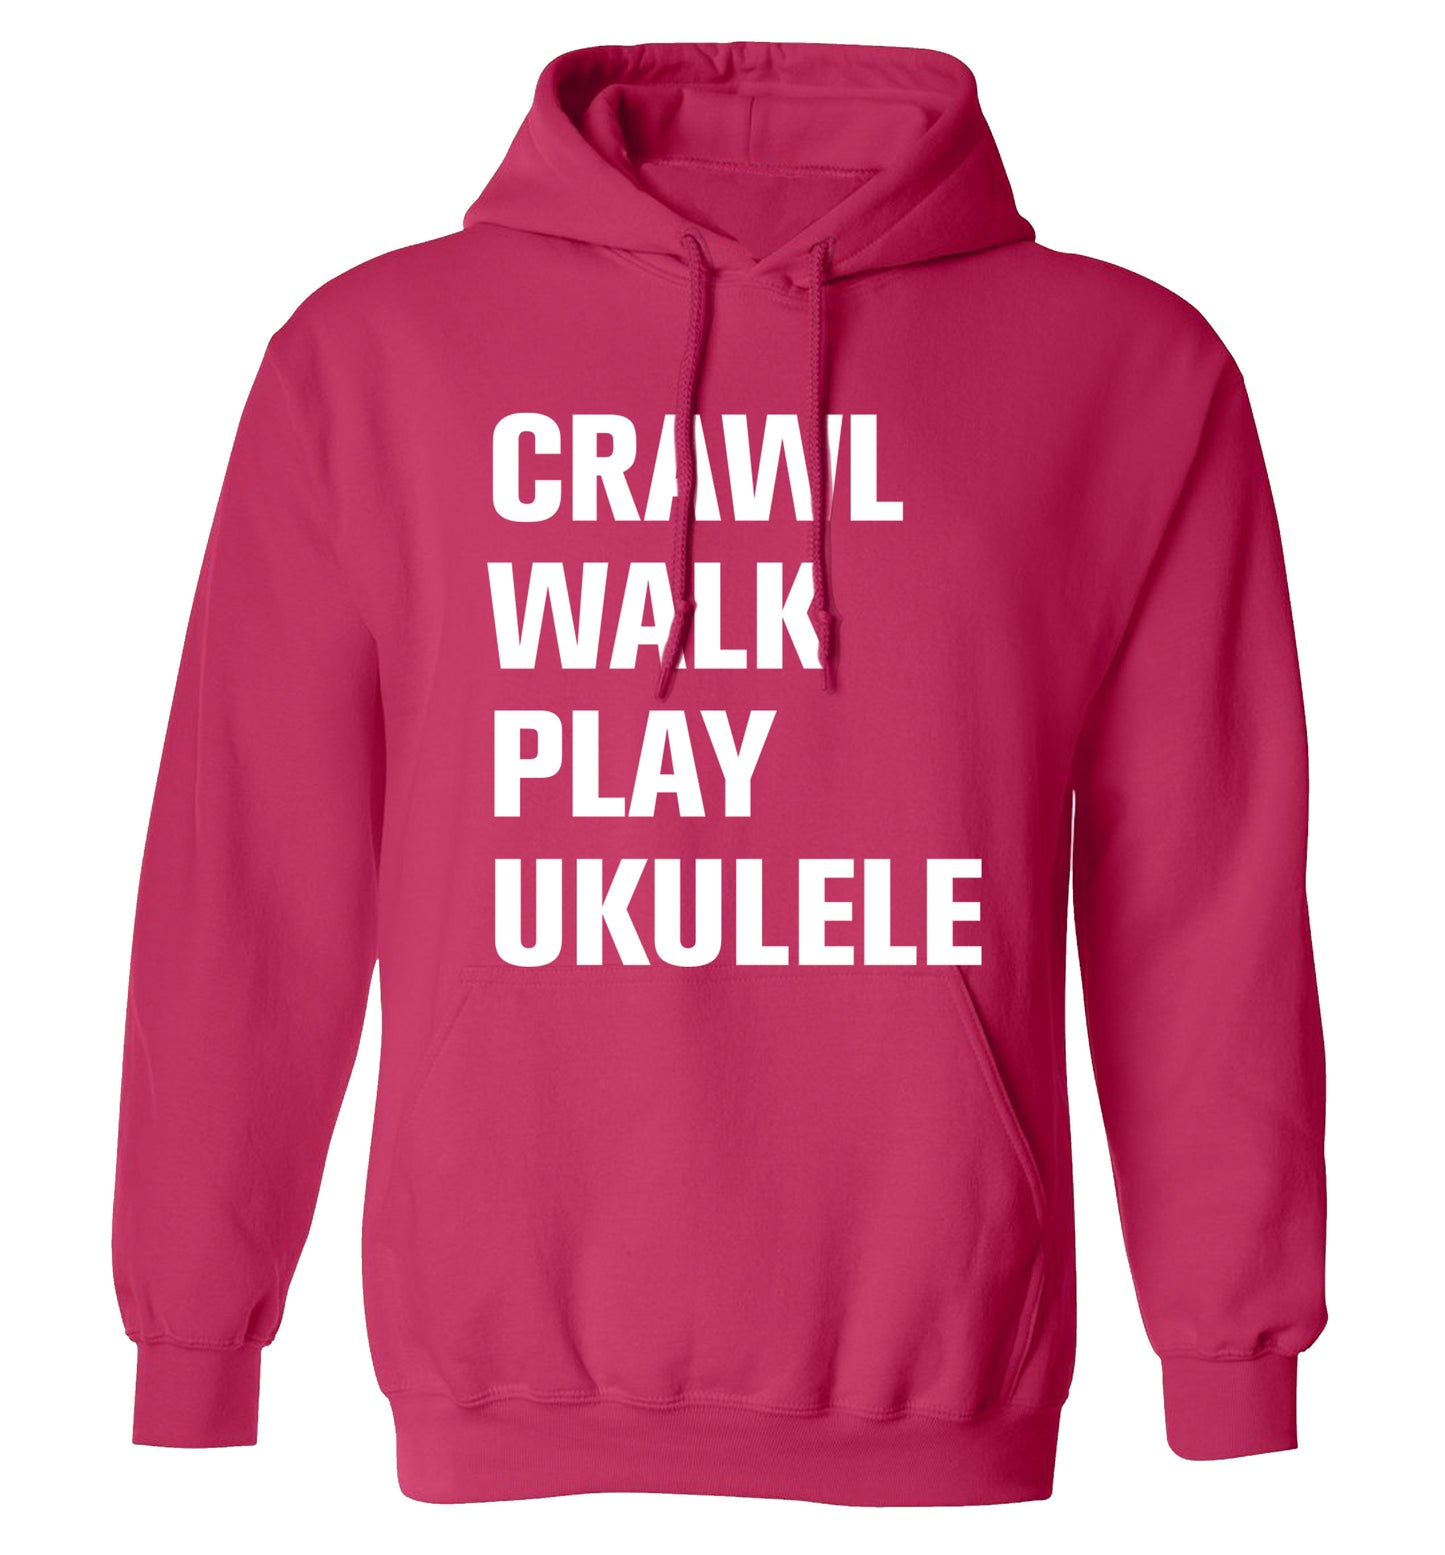 Crawl walk play ukulele adults unisex pink hoodie 2XL